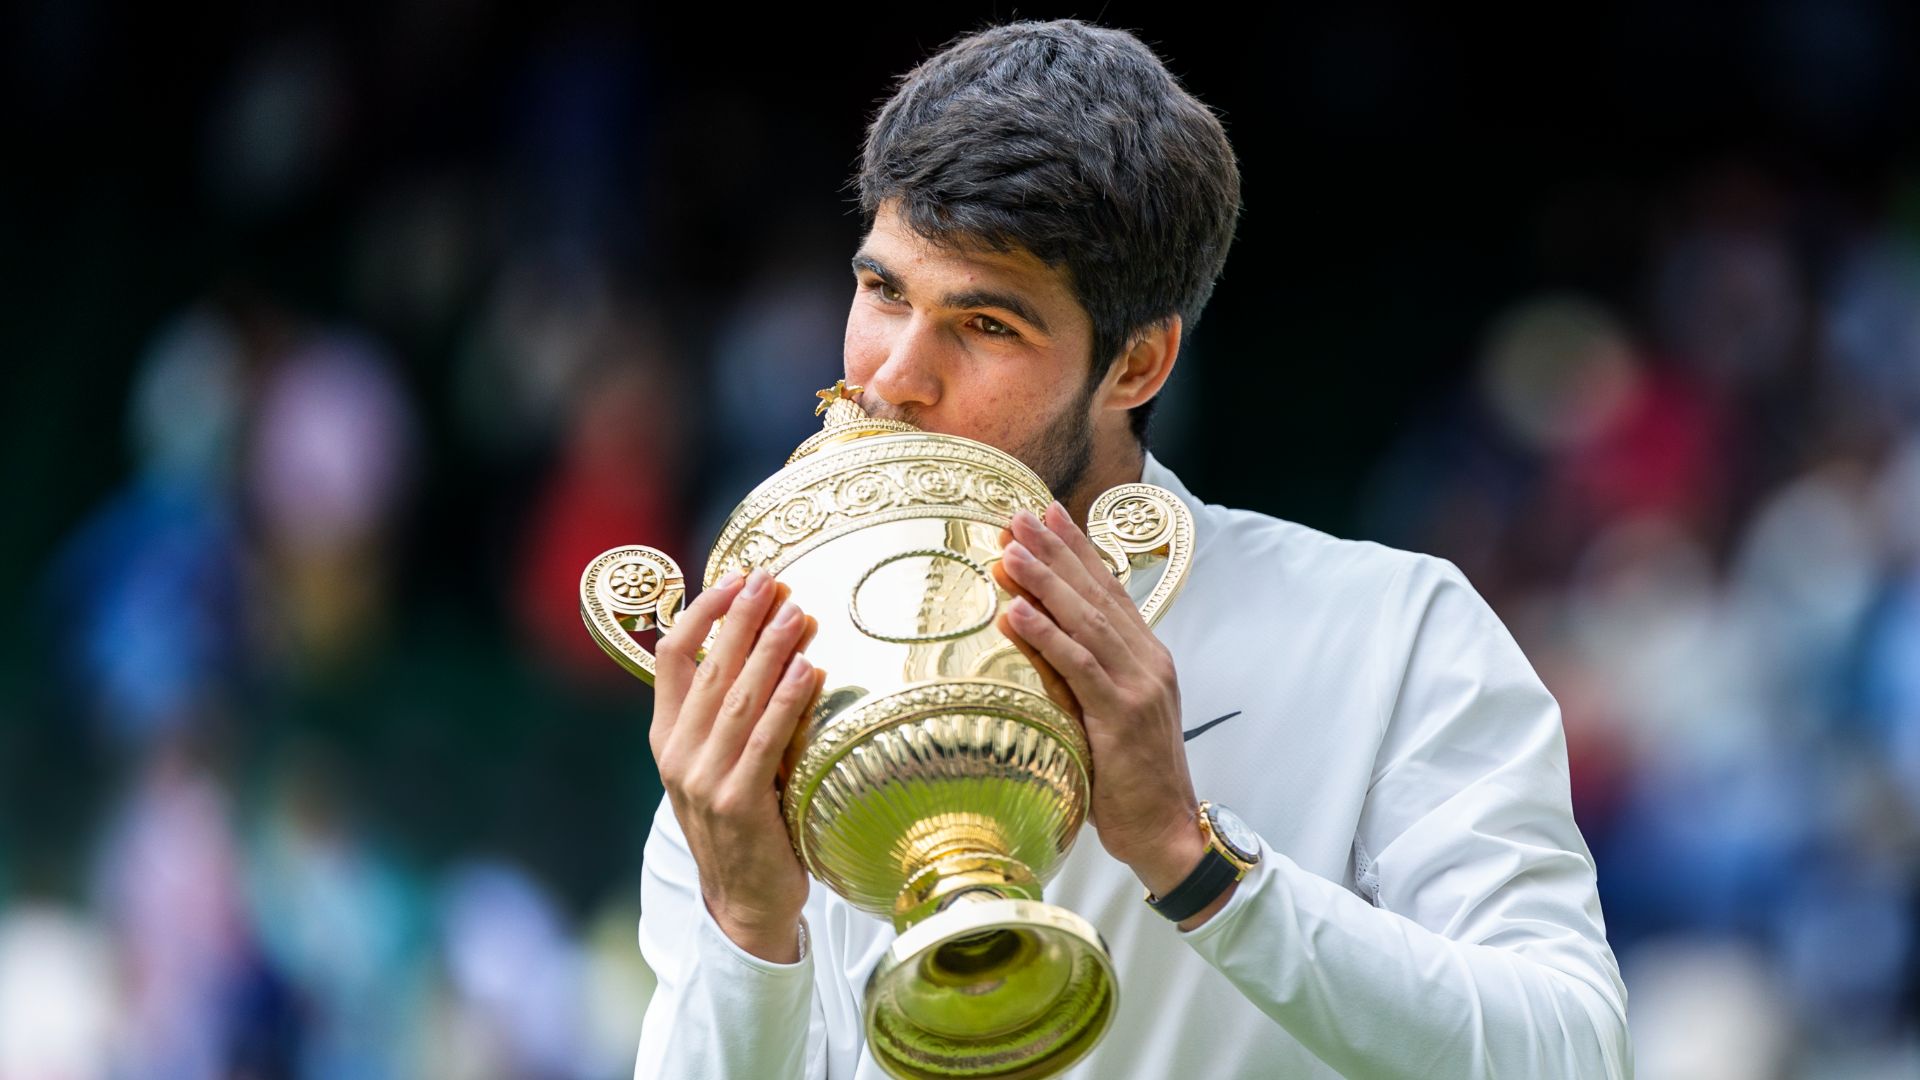 Wimbledon prize money up to £50m